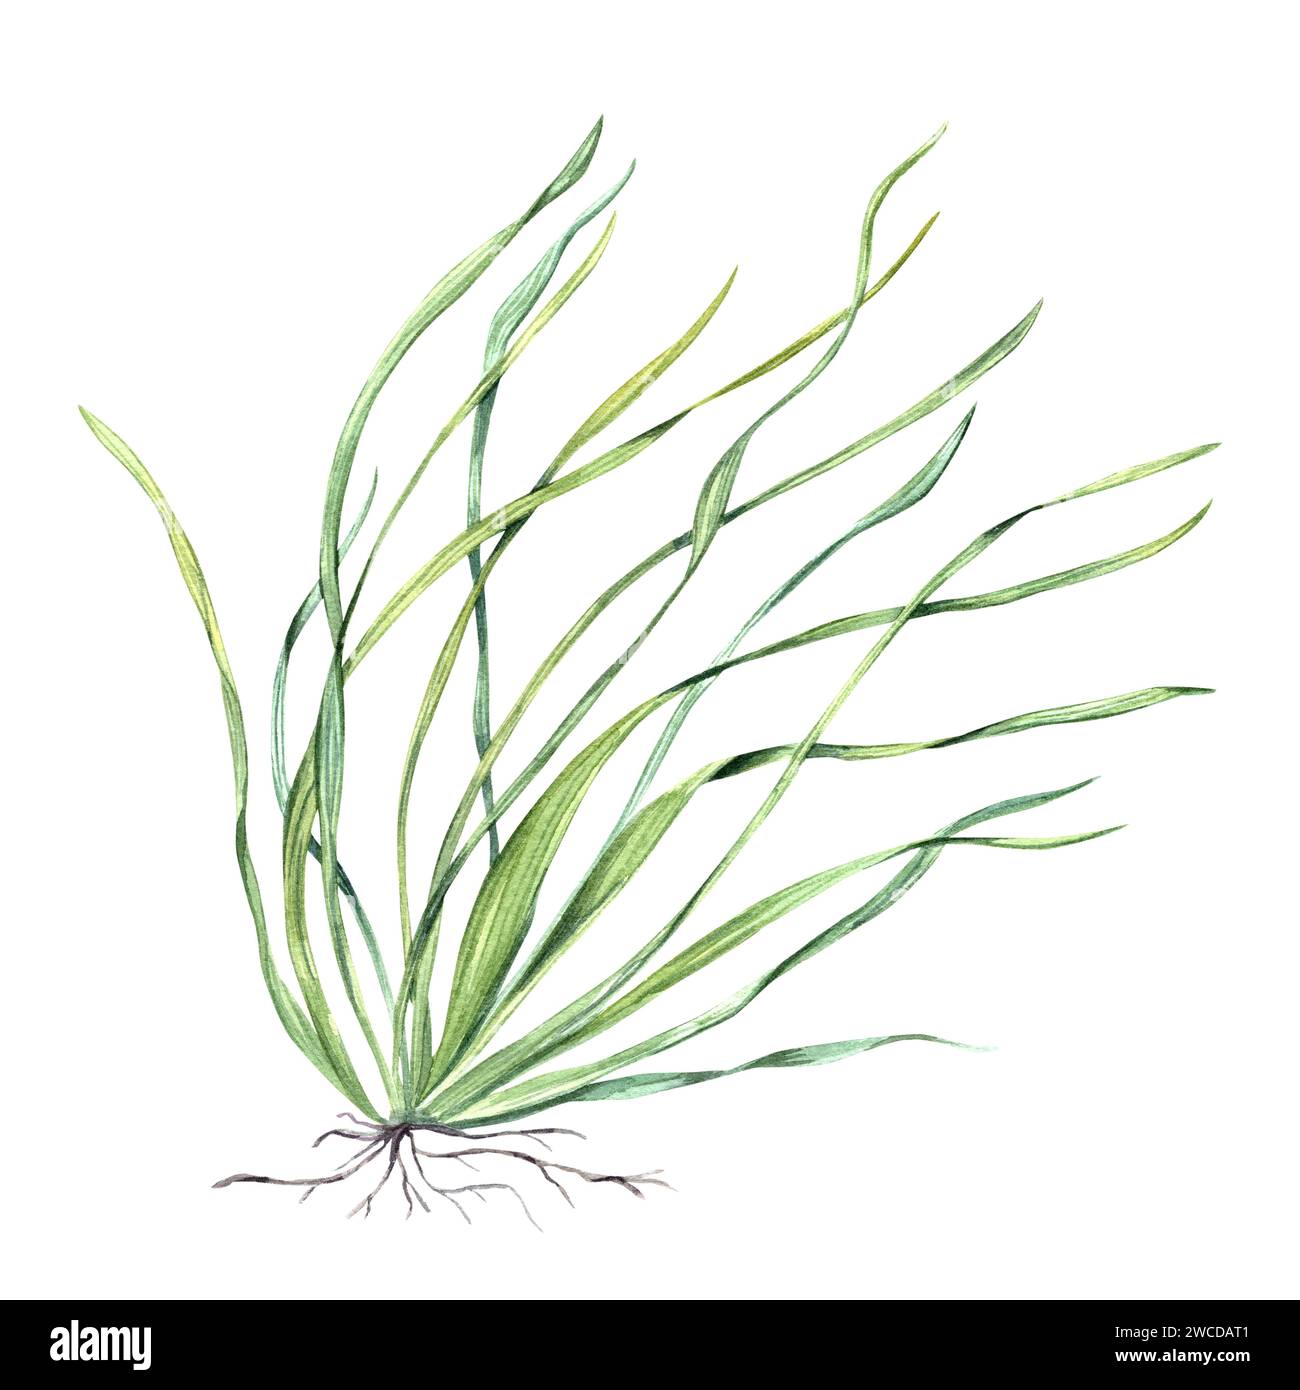 Sea grass with roots. Algae, seaweed. Underwater kelp. Green herb with long leaves. Aquarium plant. Echinodorus. Vallisneria. Watercolor illustration Stock Photo